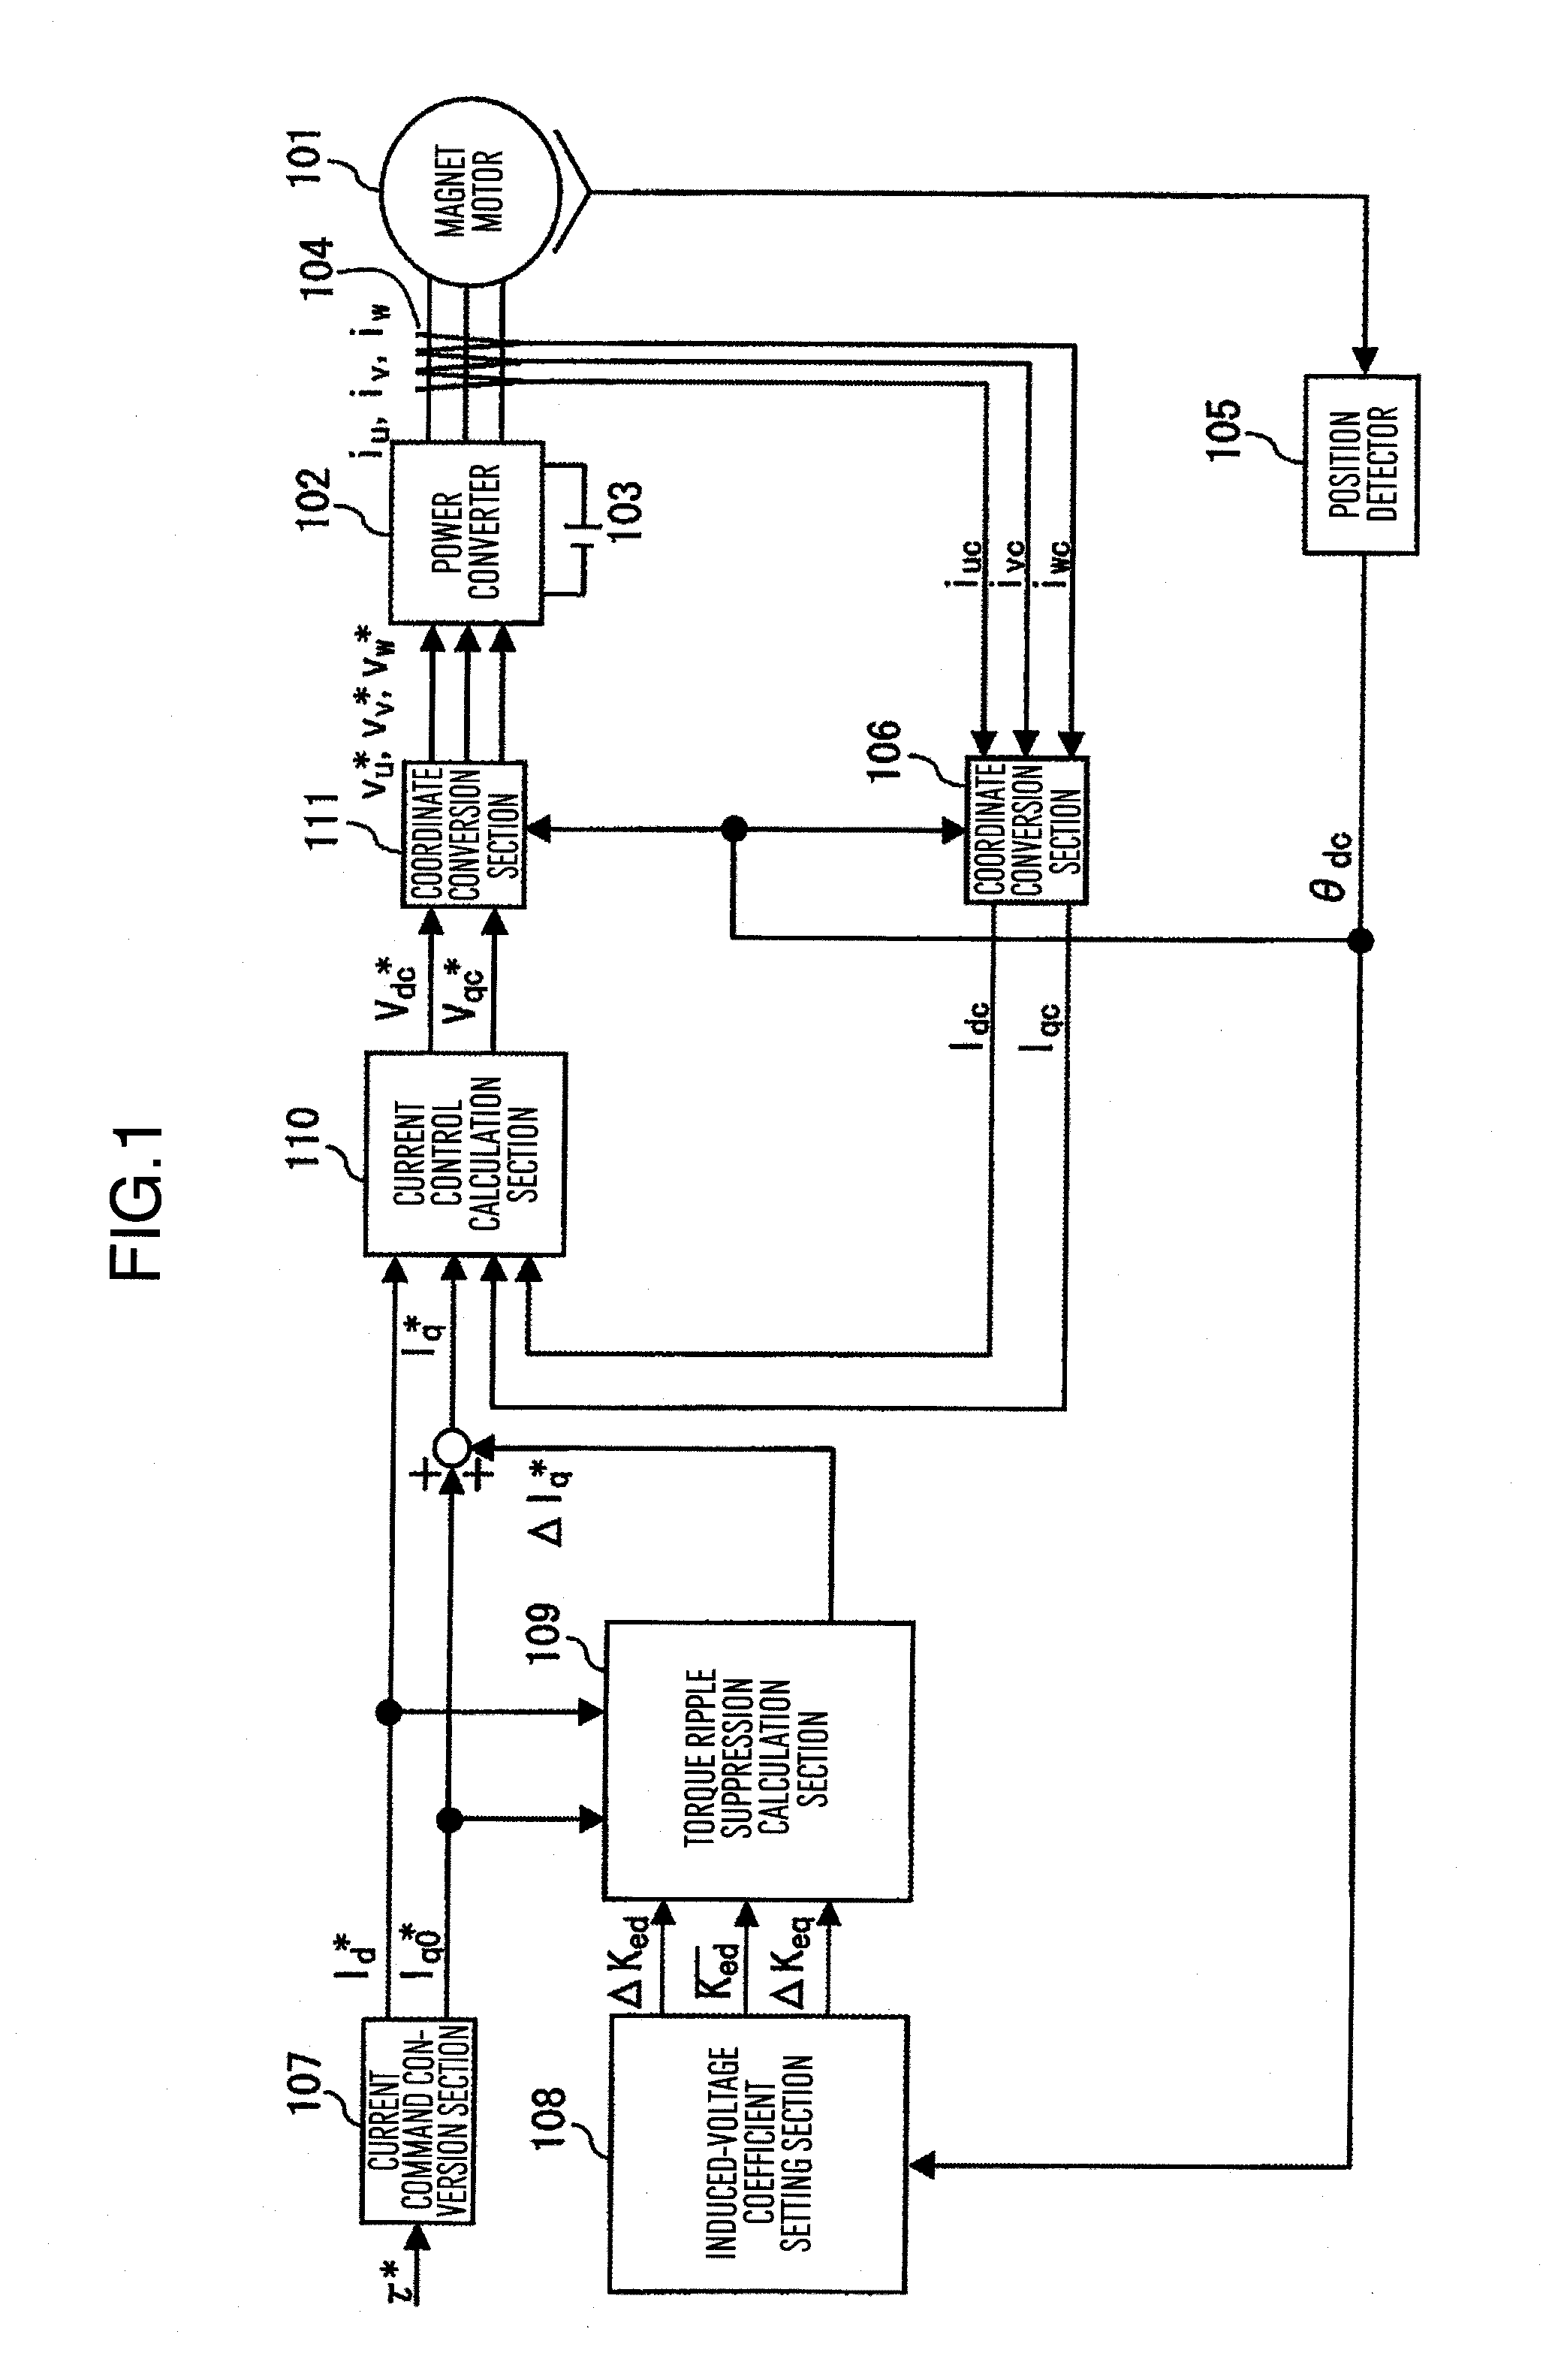 Control apparatus for permanent magnet motor